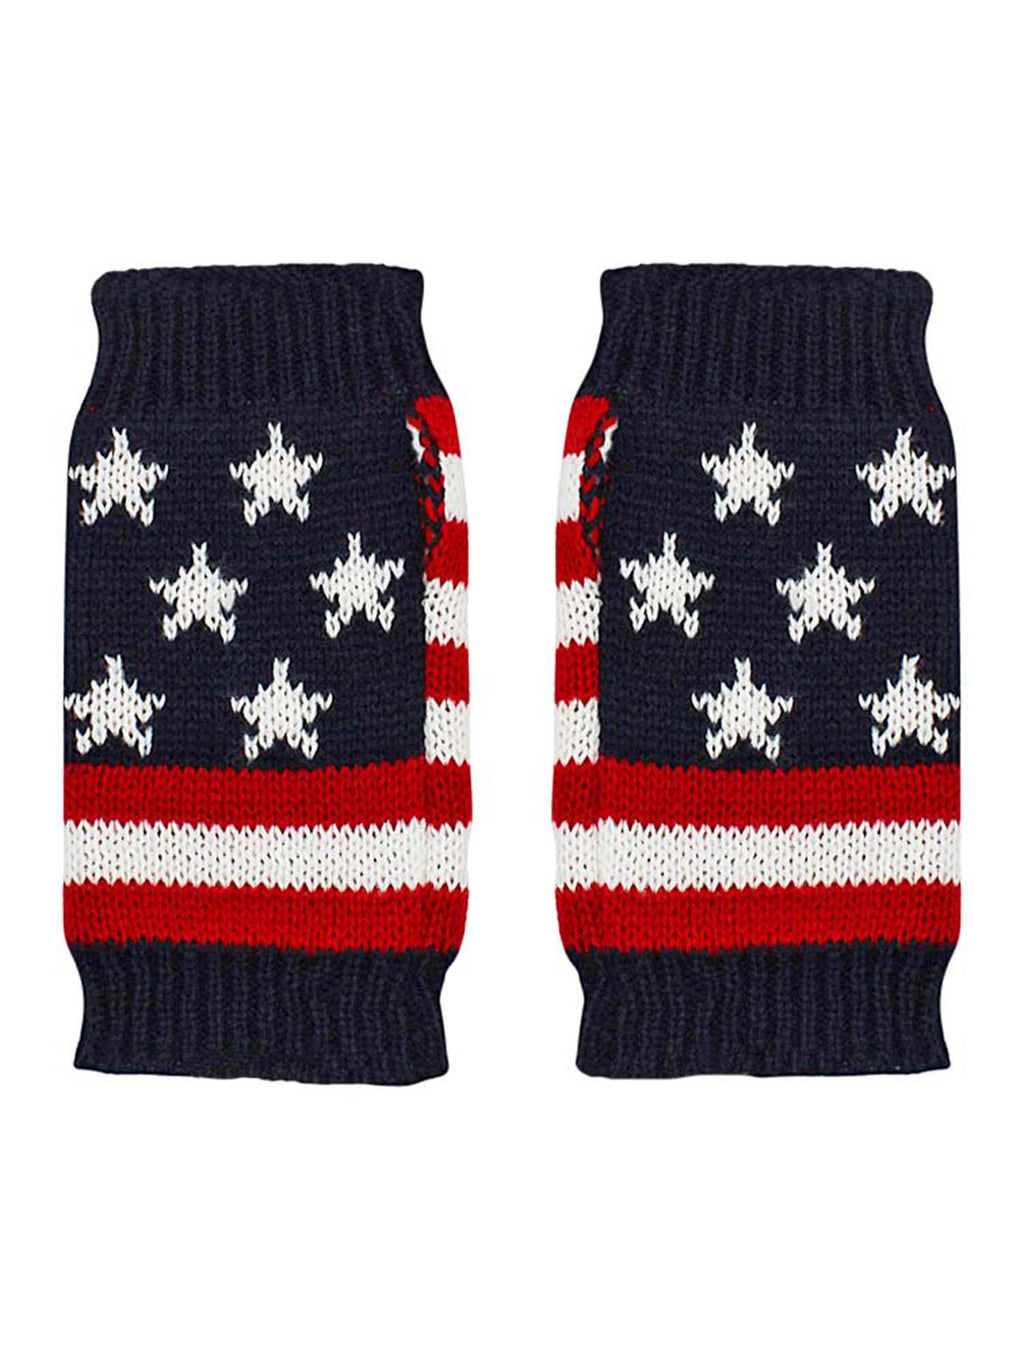 American Flag Knit Fingerless Glove Arm Warmers